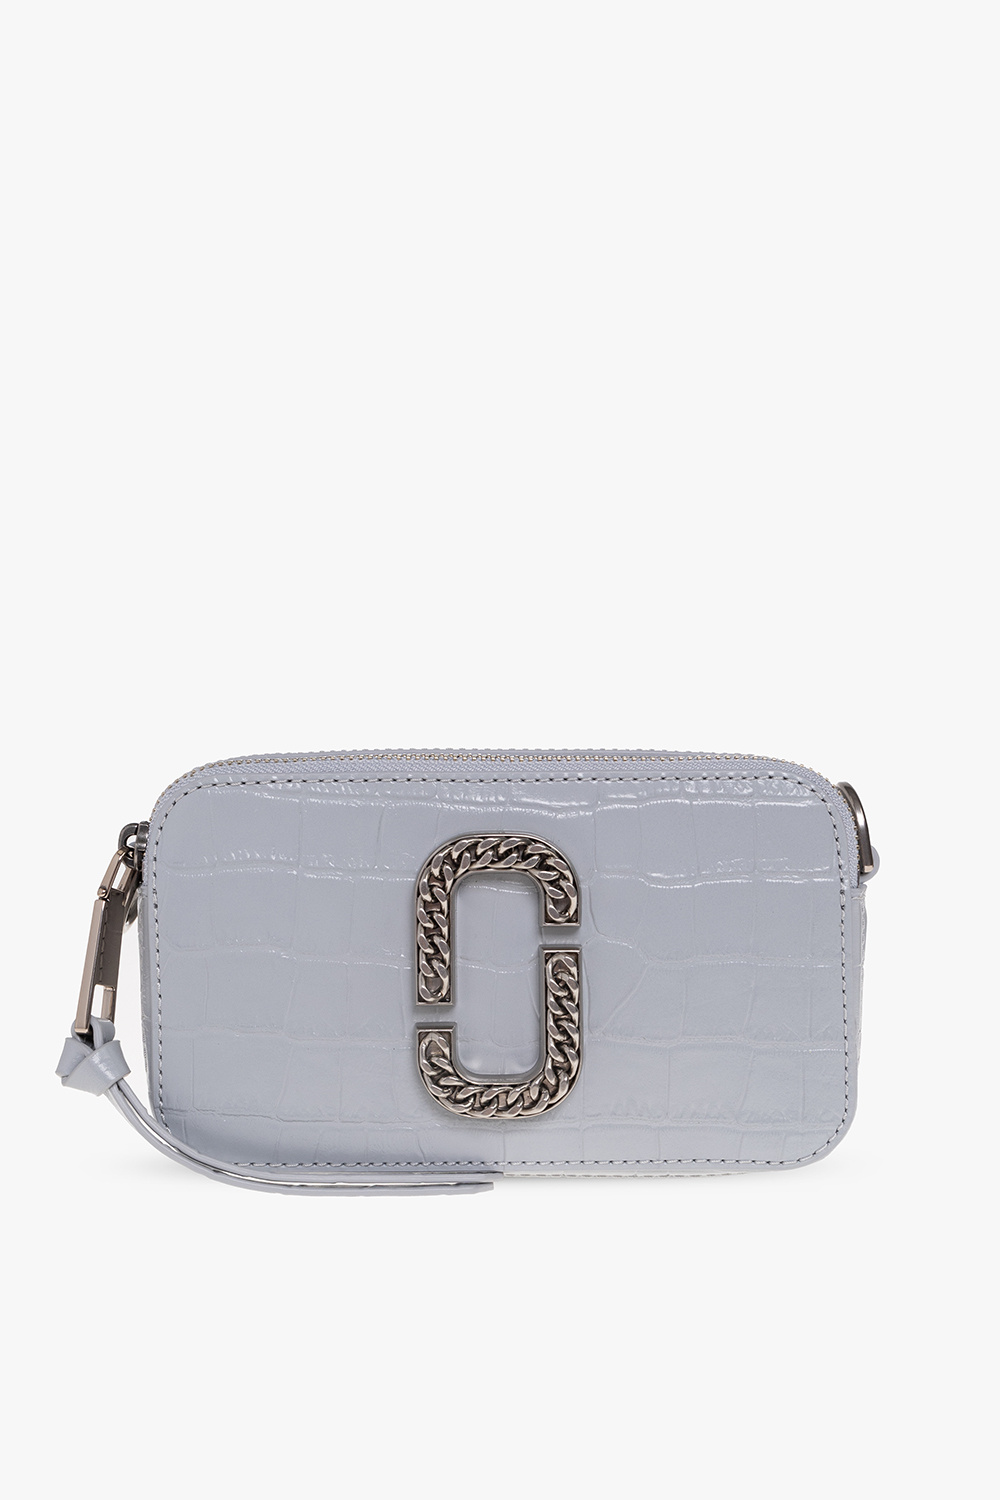 Marc Jacobs ‘The Croc-Embossed Snapshot’ shoulder bag | Women's Bags ...